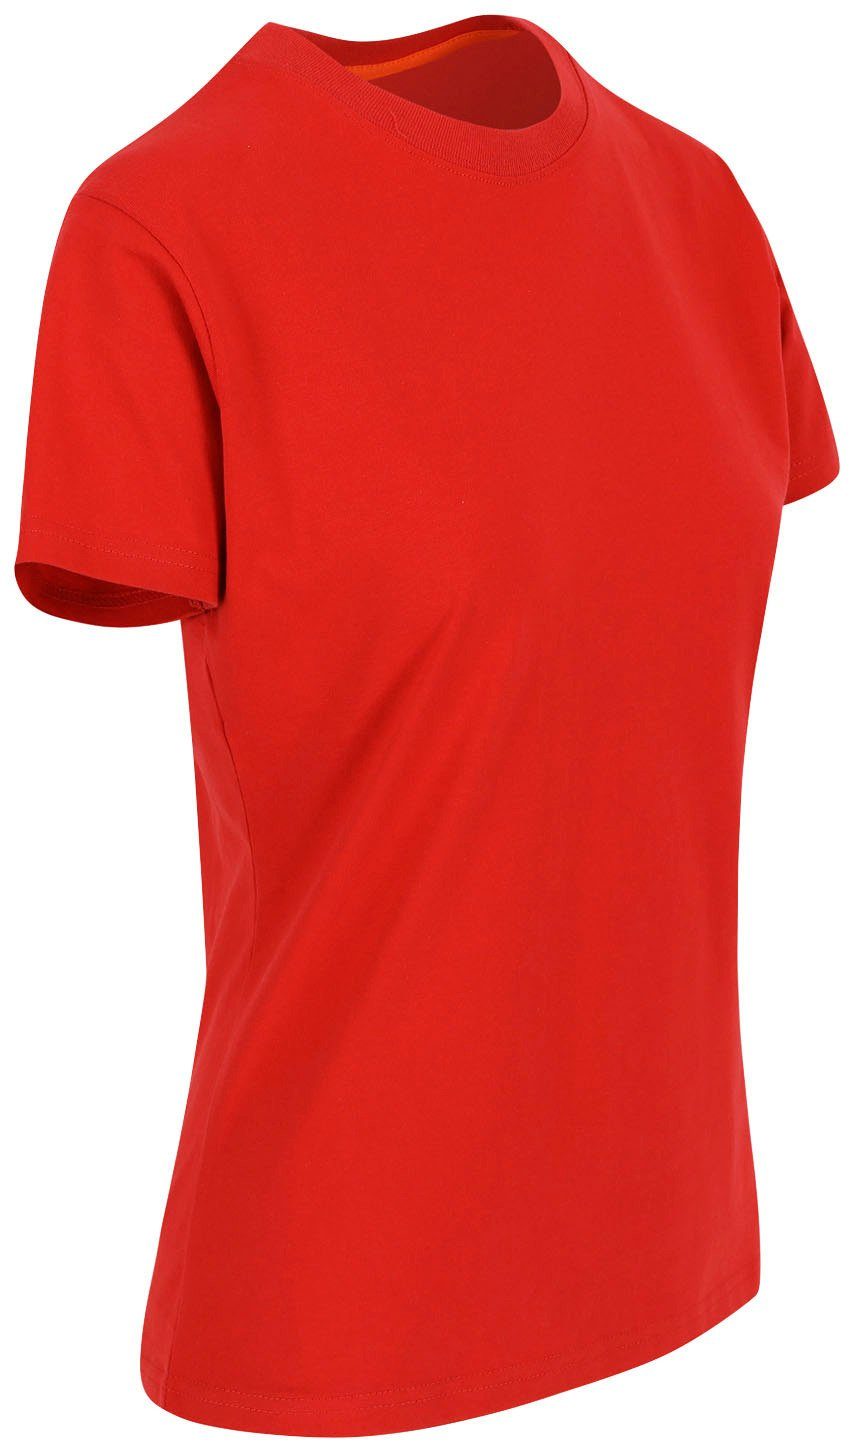 Schlaufe, T-Shirt Tragegefühl angenehmes Herock Damen Epona rot 1 Figurbetont, T-Shirt Kurzärmlig hintere